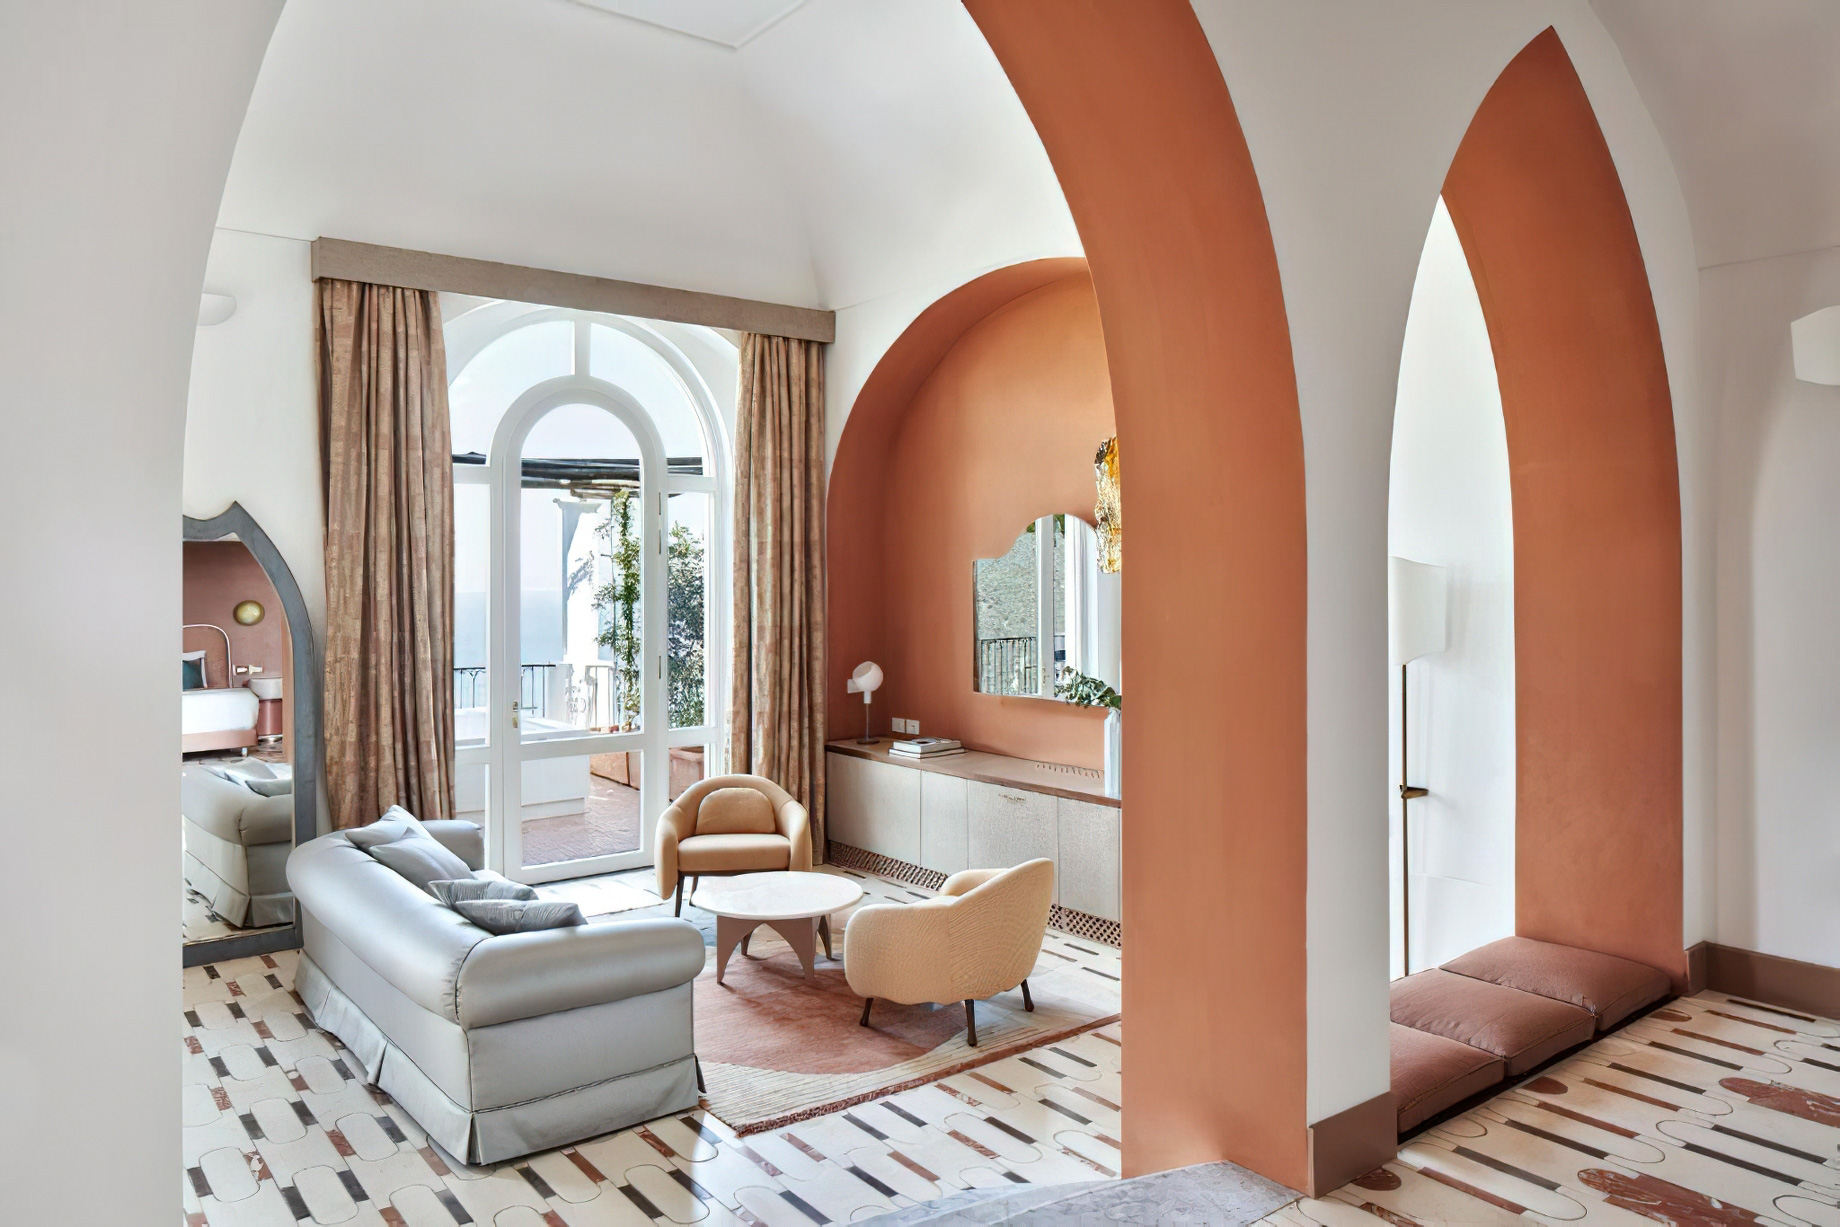 Palazzo Avino Hotel – Amalfi Coast, Ravello, Italy – Belvedere Suite with Sea View and Terrace